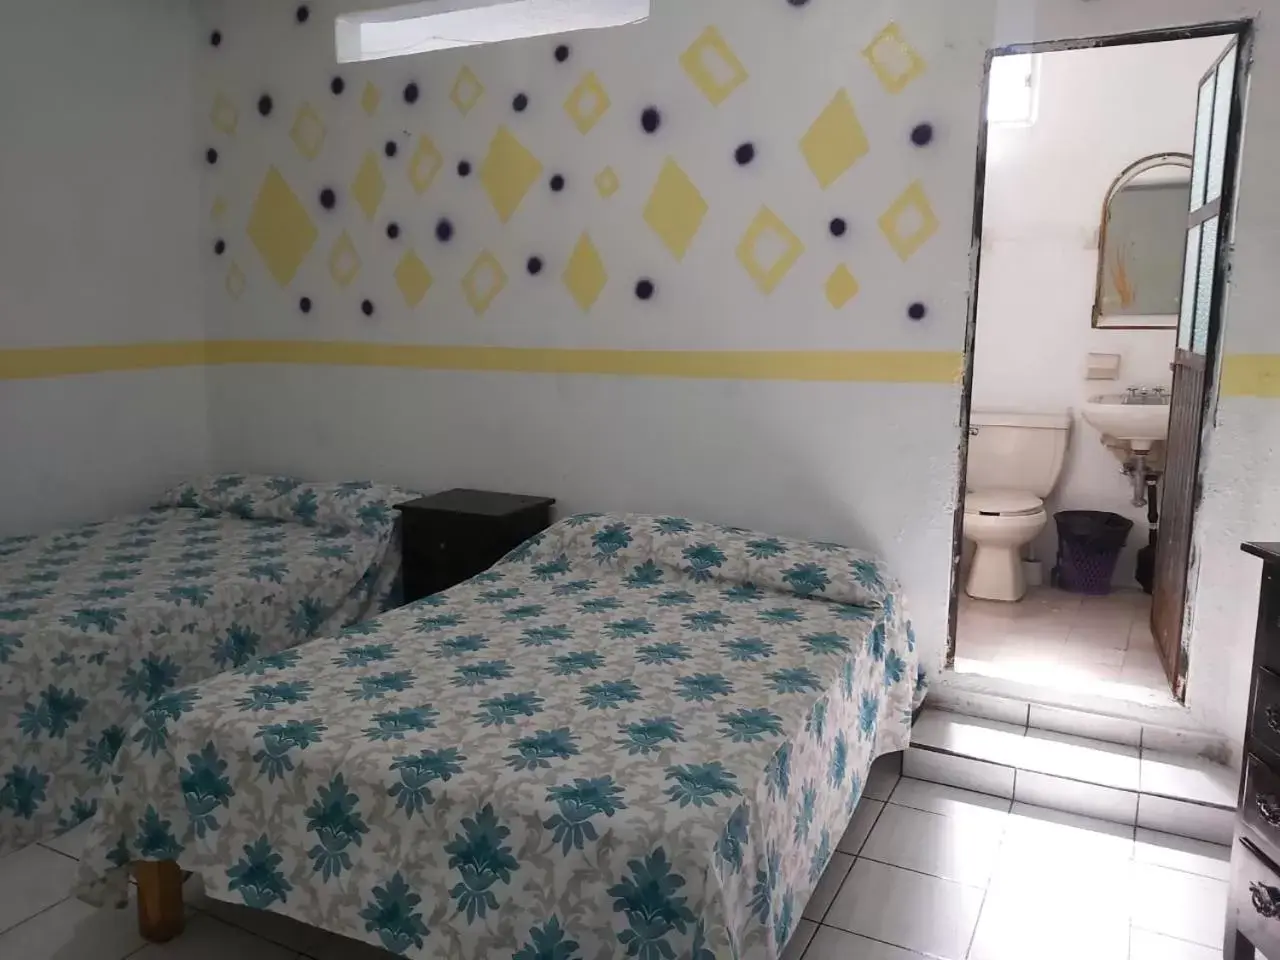 Bed, Room Photo in Hotel Ayalamar Manzanillo